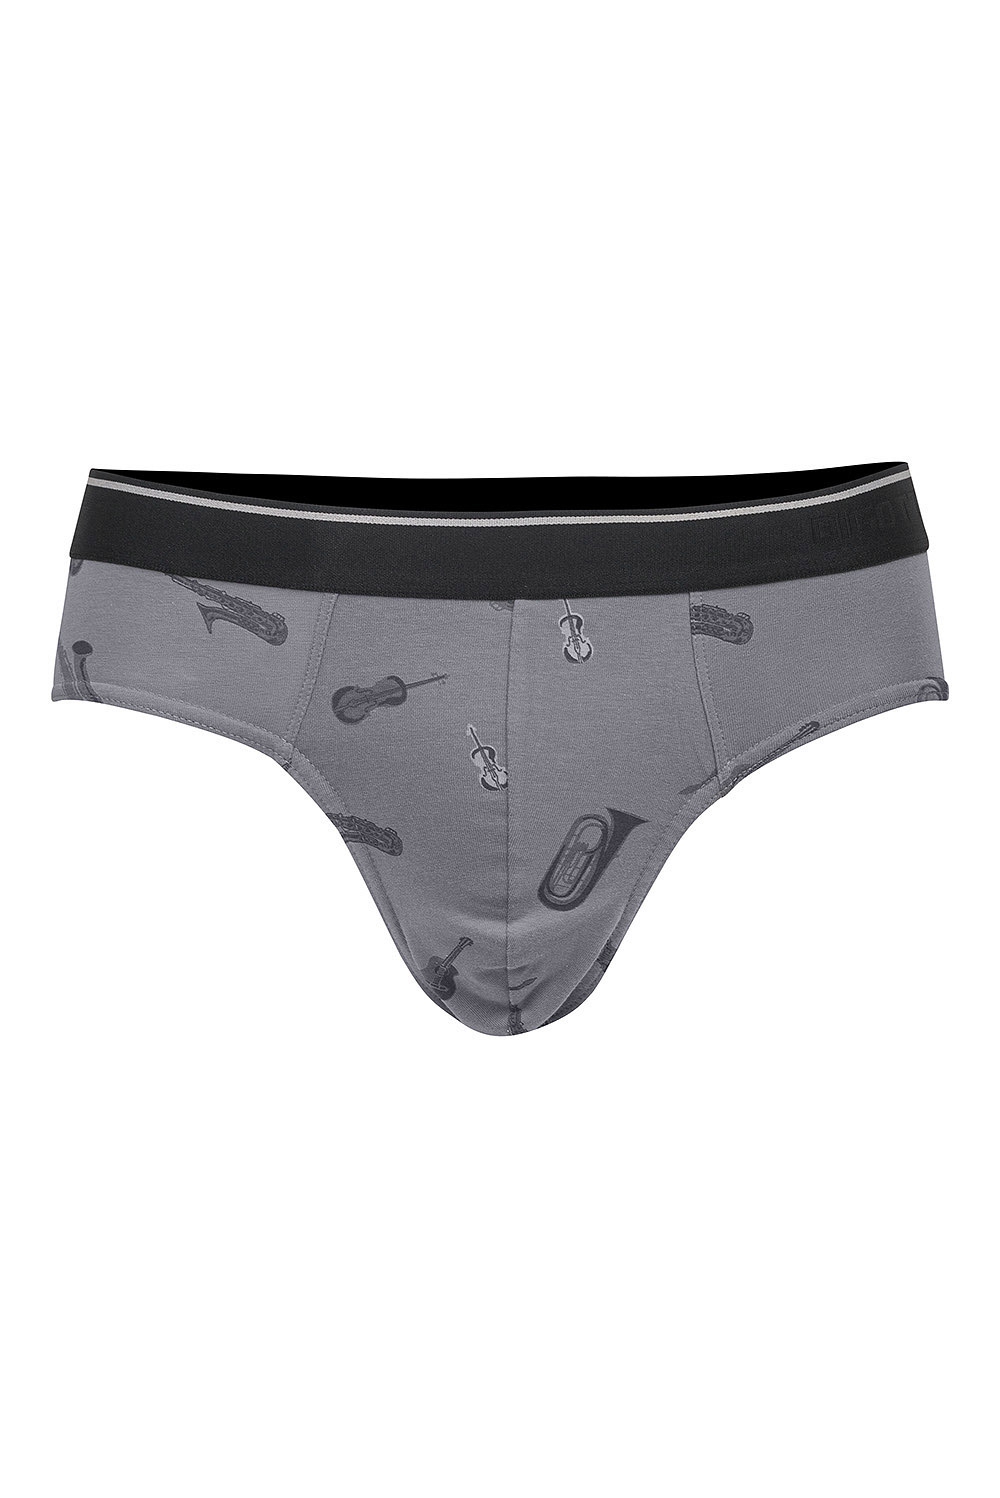 Grey geometric slips underwear 0